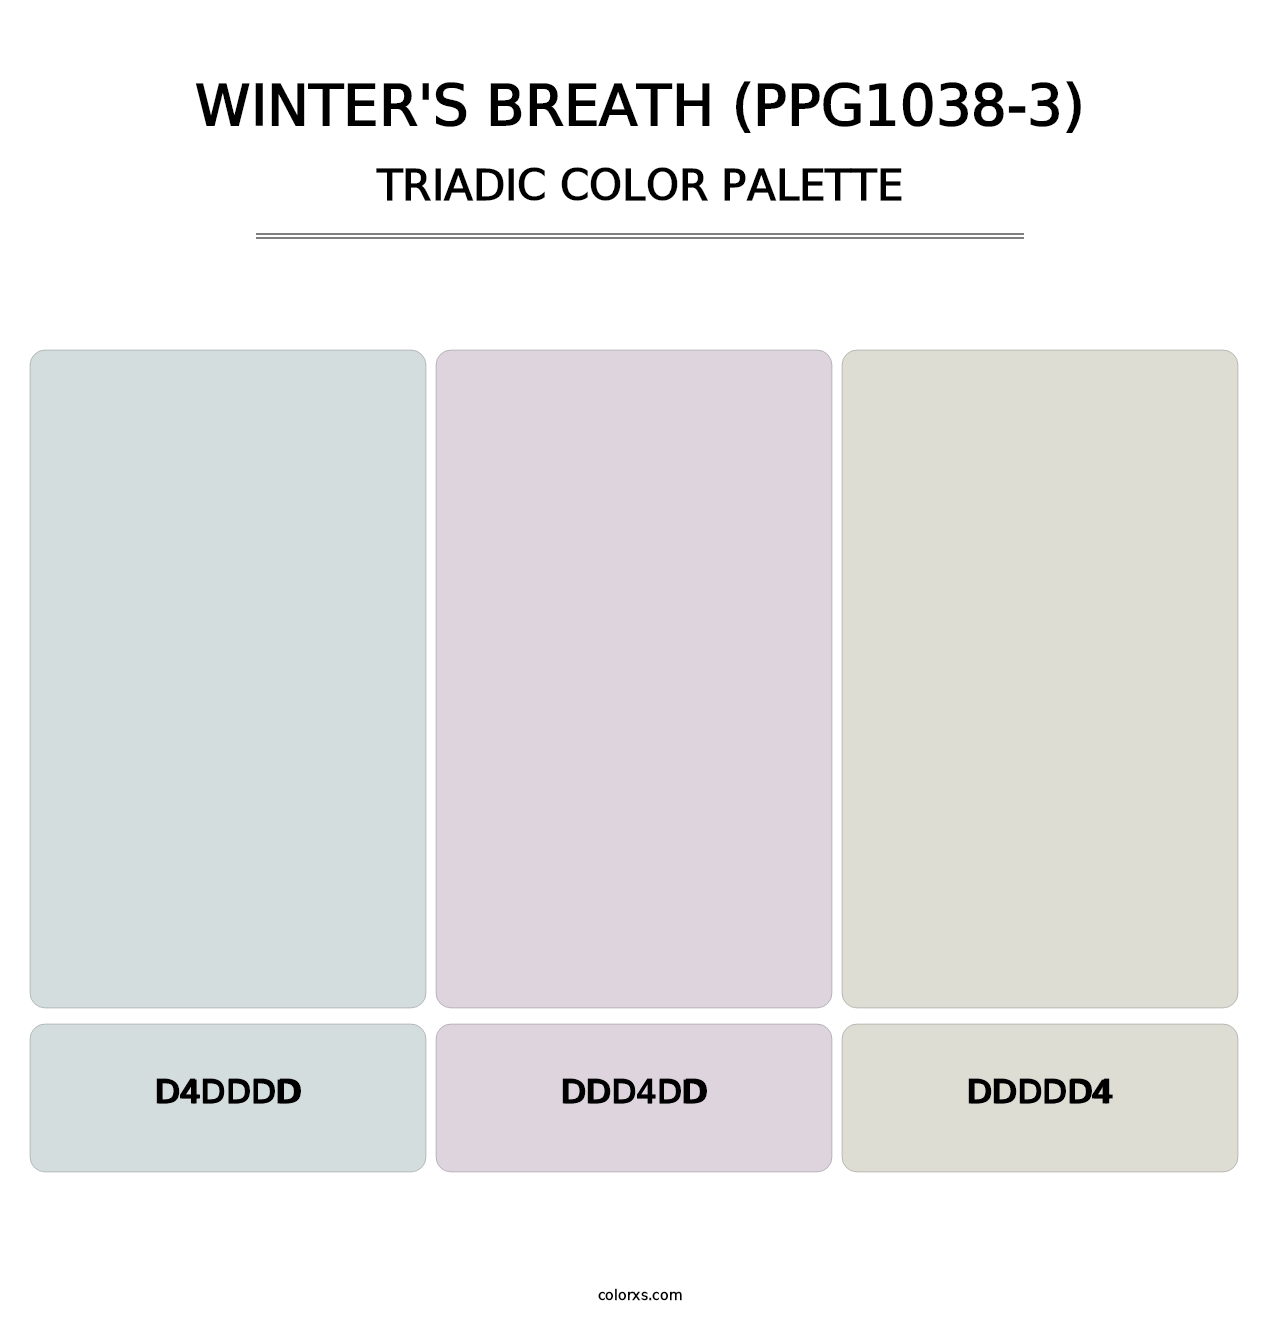 Winter's Breath (PPG1038-3) - Triadic Color Palette